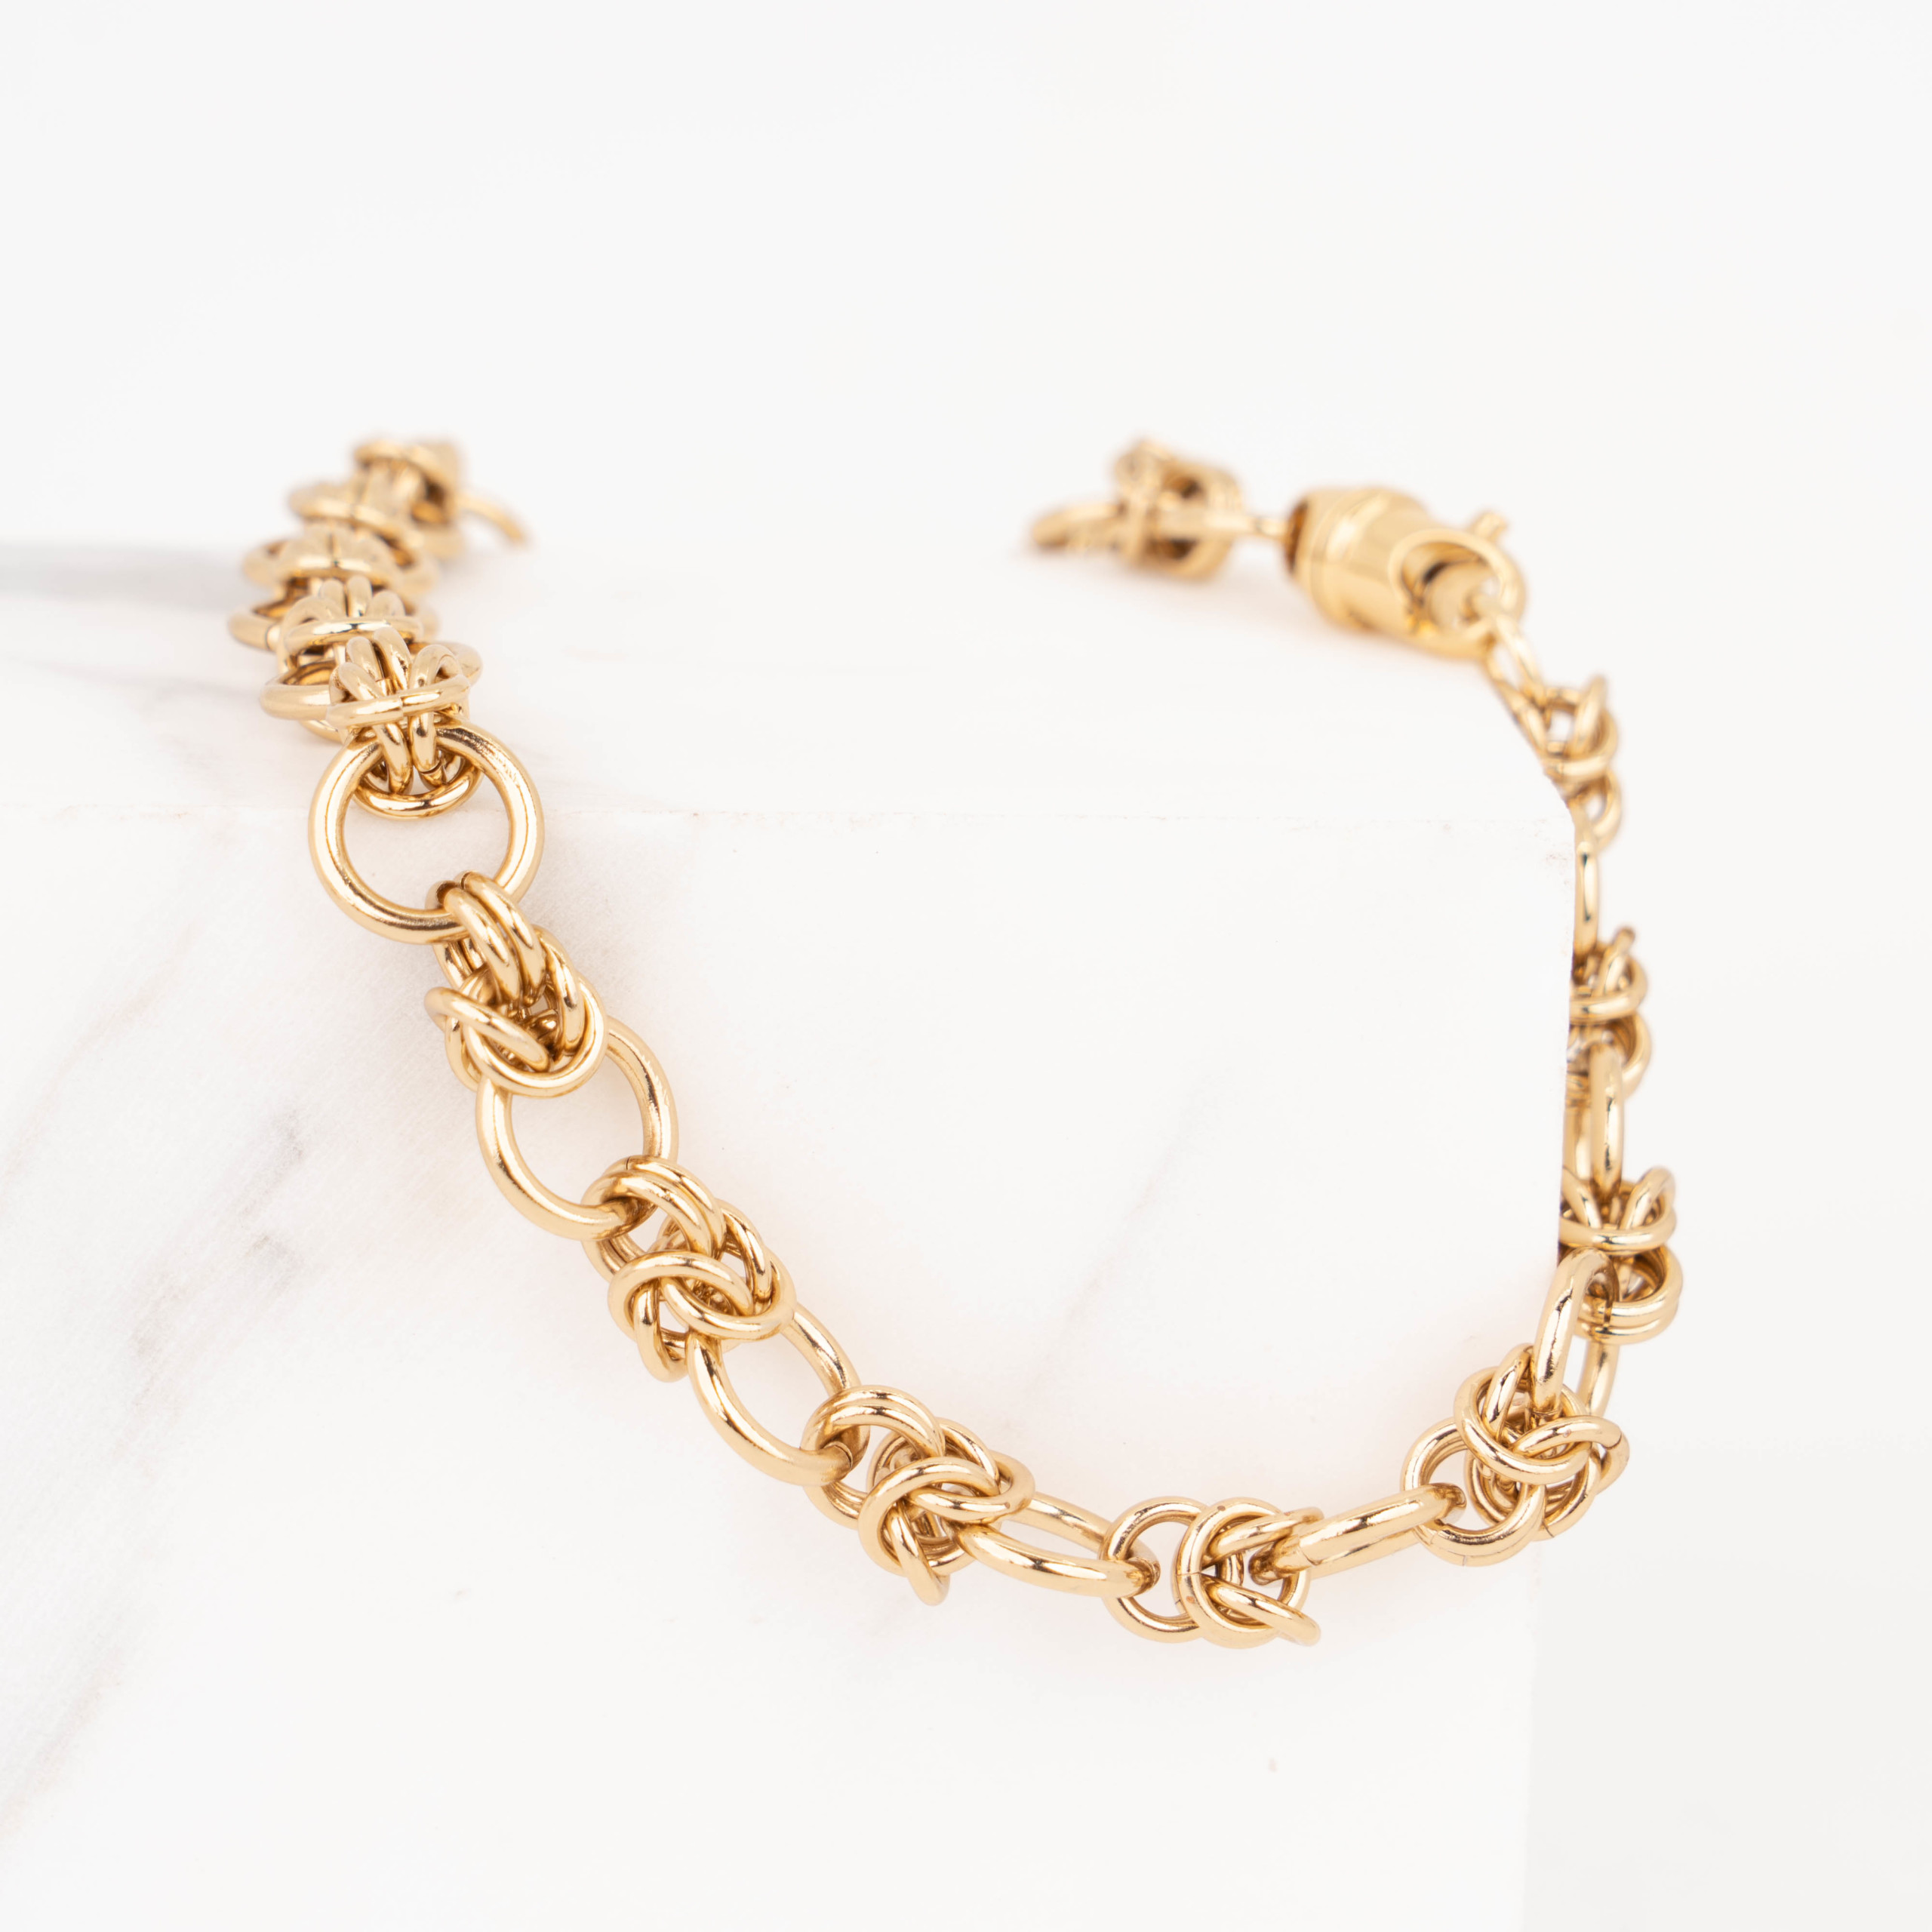 Nicole chain gold necklace